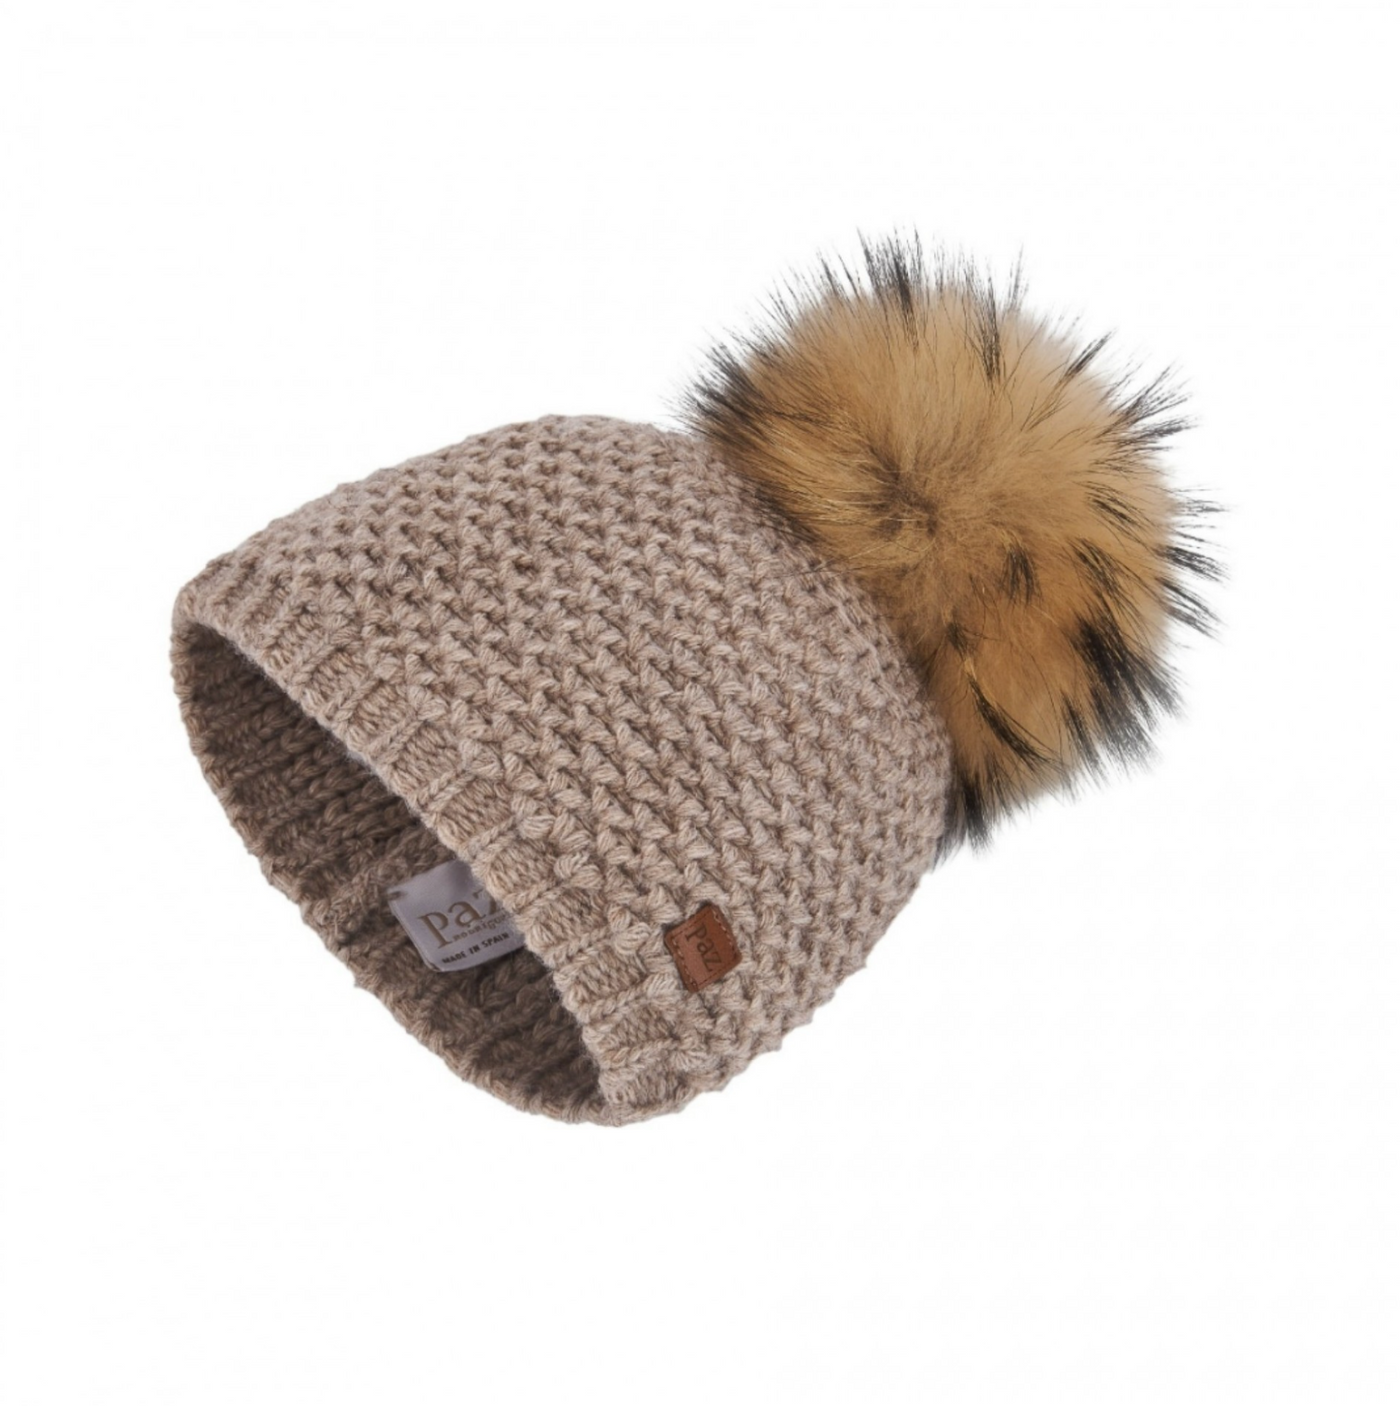 Wool Knitted Pom Pom Hat